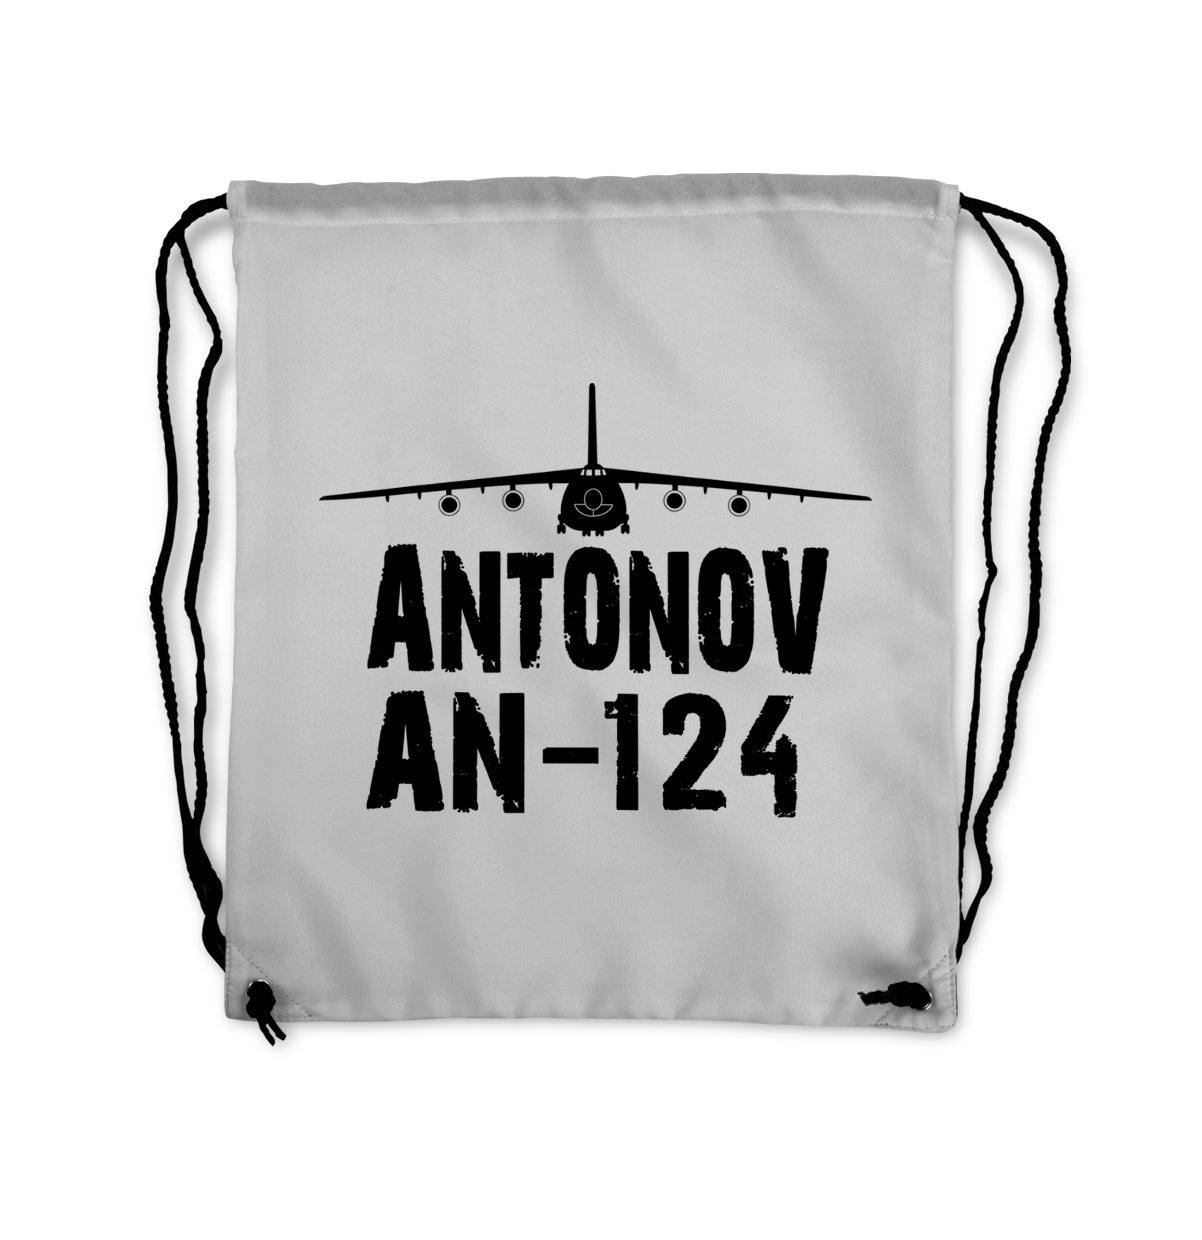 Antonov AN-124 & Plane Designed Drawstring Bags